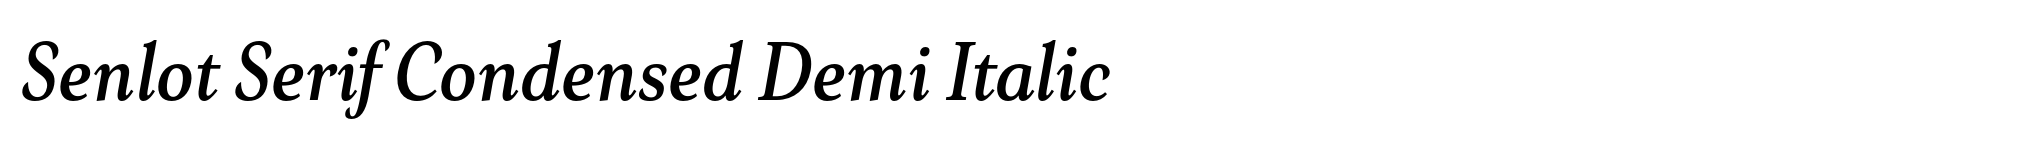 Senlot Serif Condensed Demi Italic image